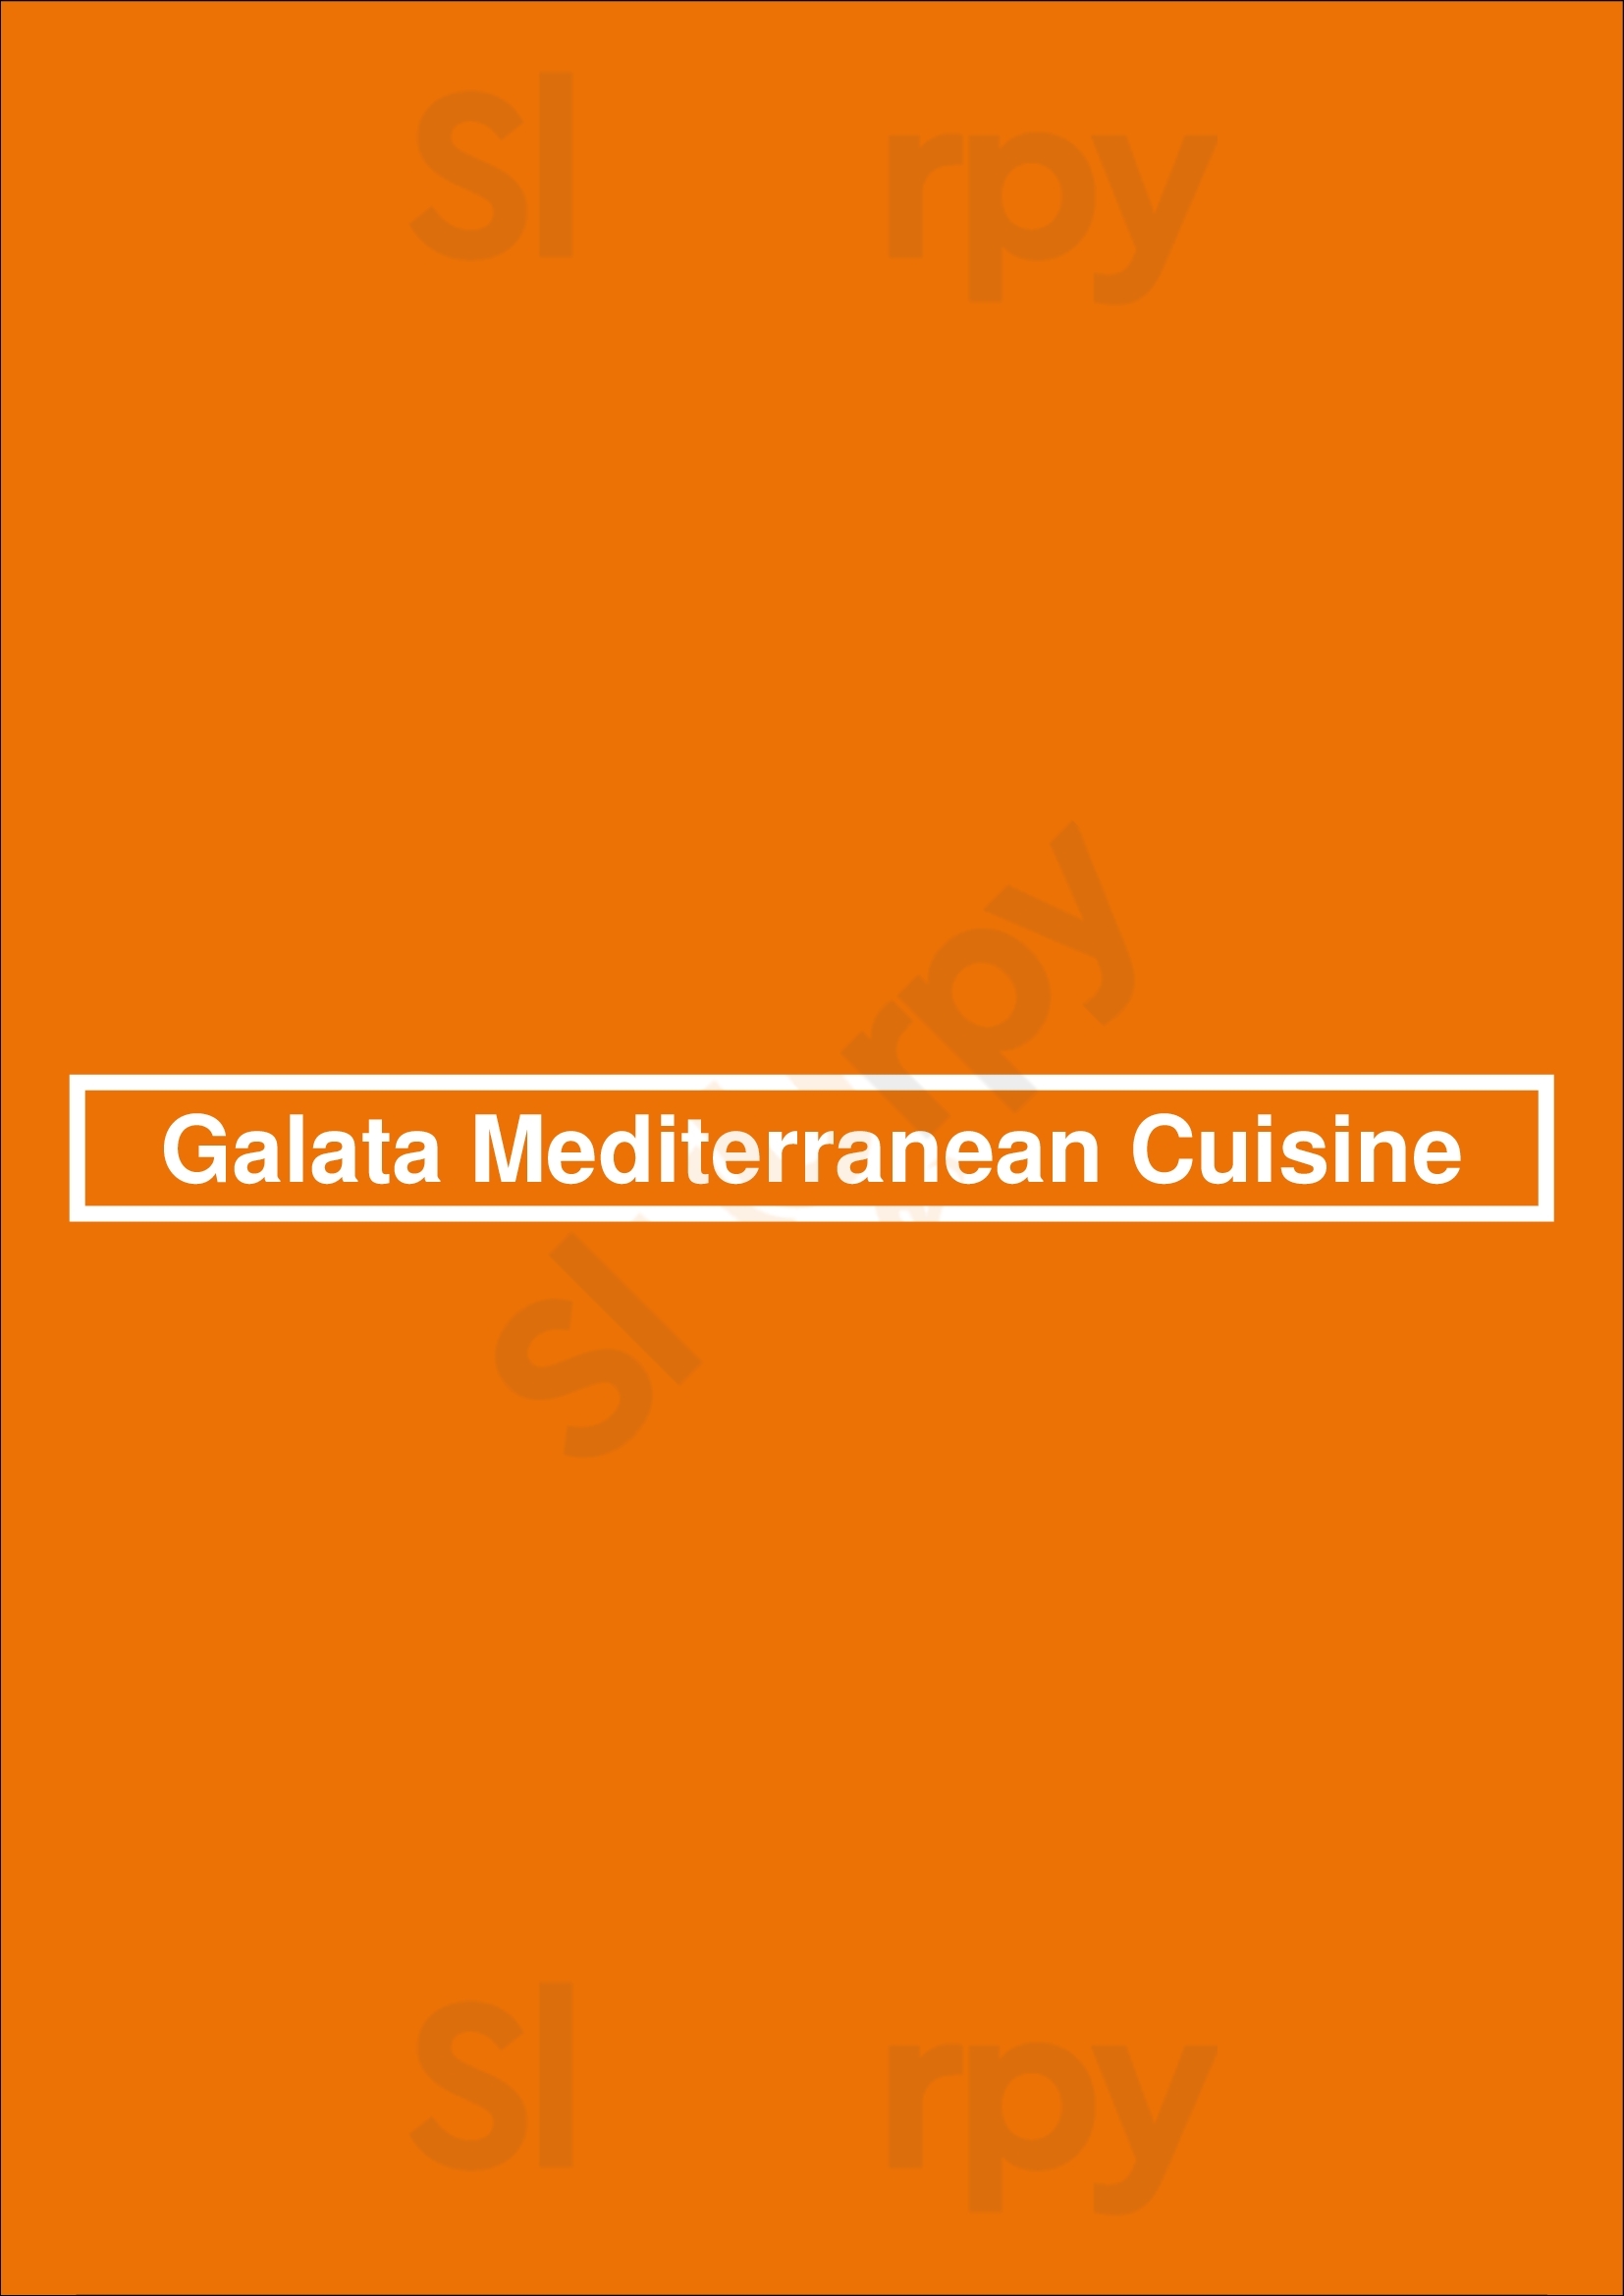 Galata Mediterranean Cuisine New York City Menu - 1